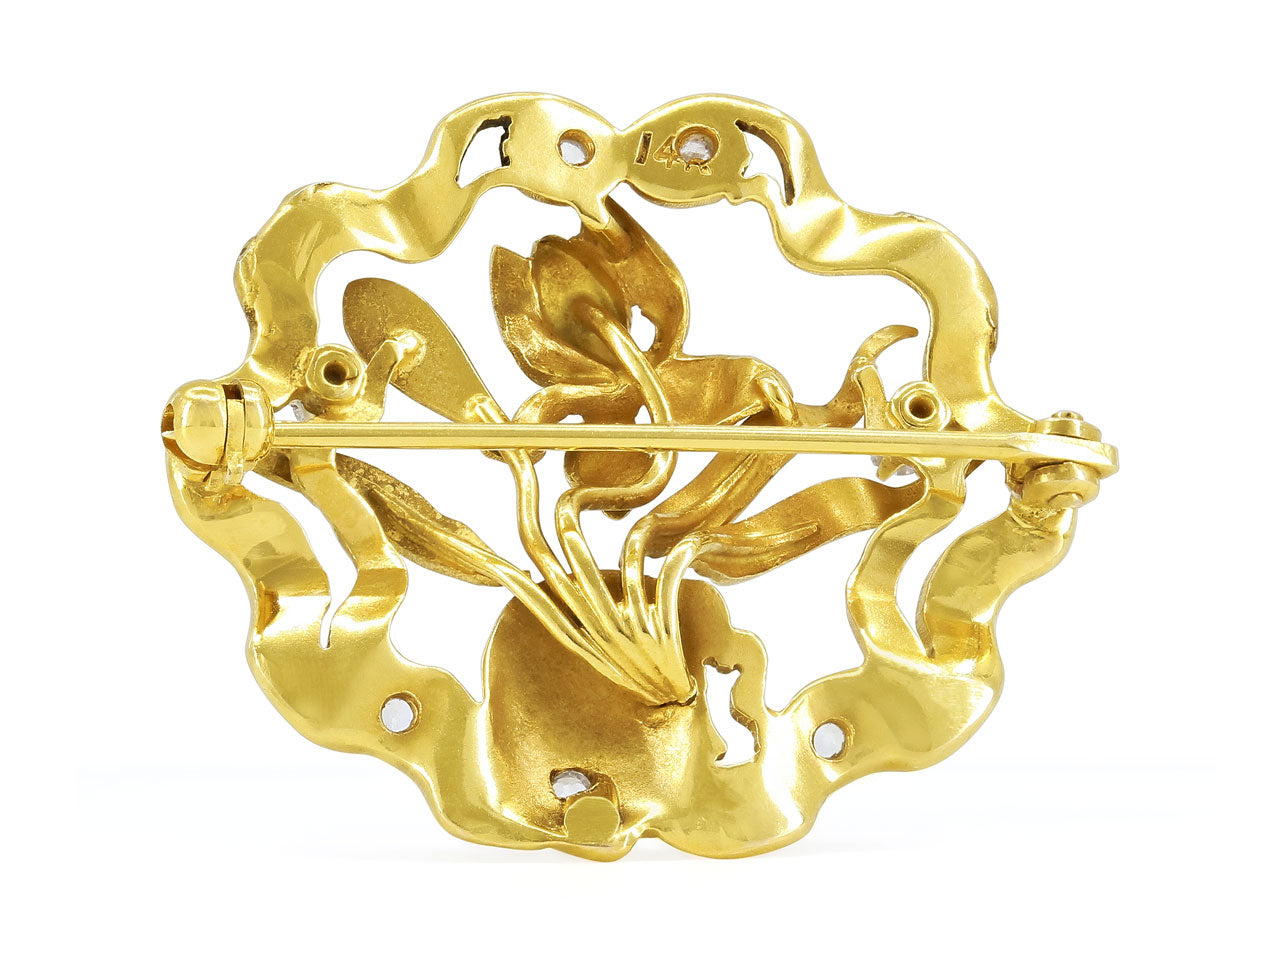 Antique Art Nouveau Diamond Brooch in 14K Gold